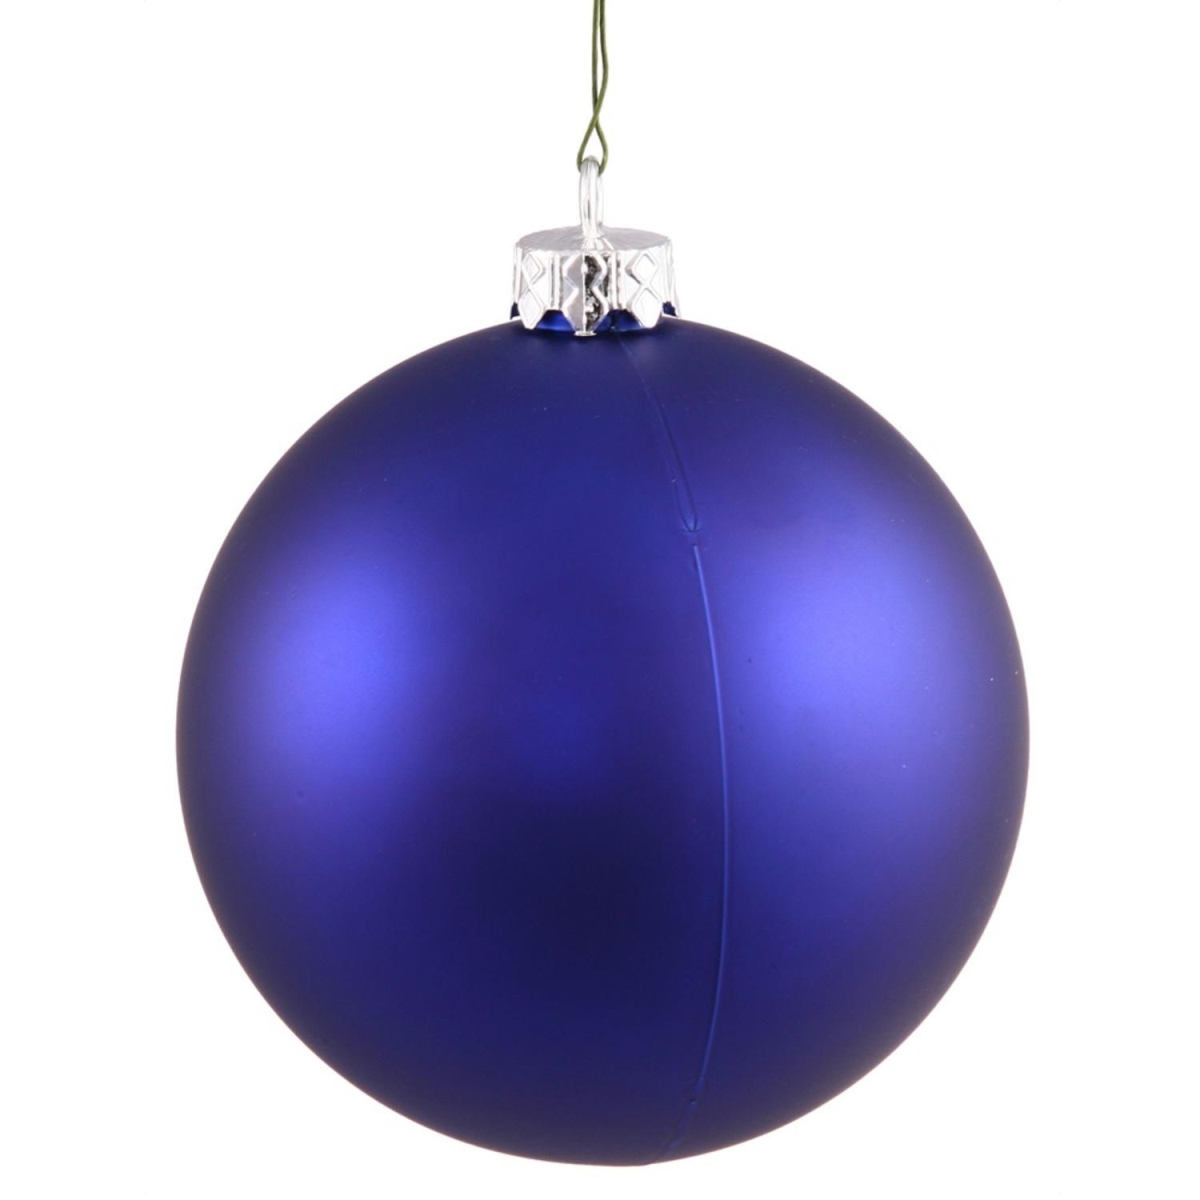 31749092 Cobalt Matte Uv Resistant Commercial Drilled Shatterproof Christmas Ball Ornament - 2.75 In.